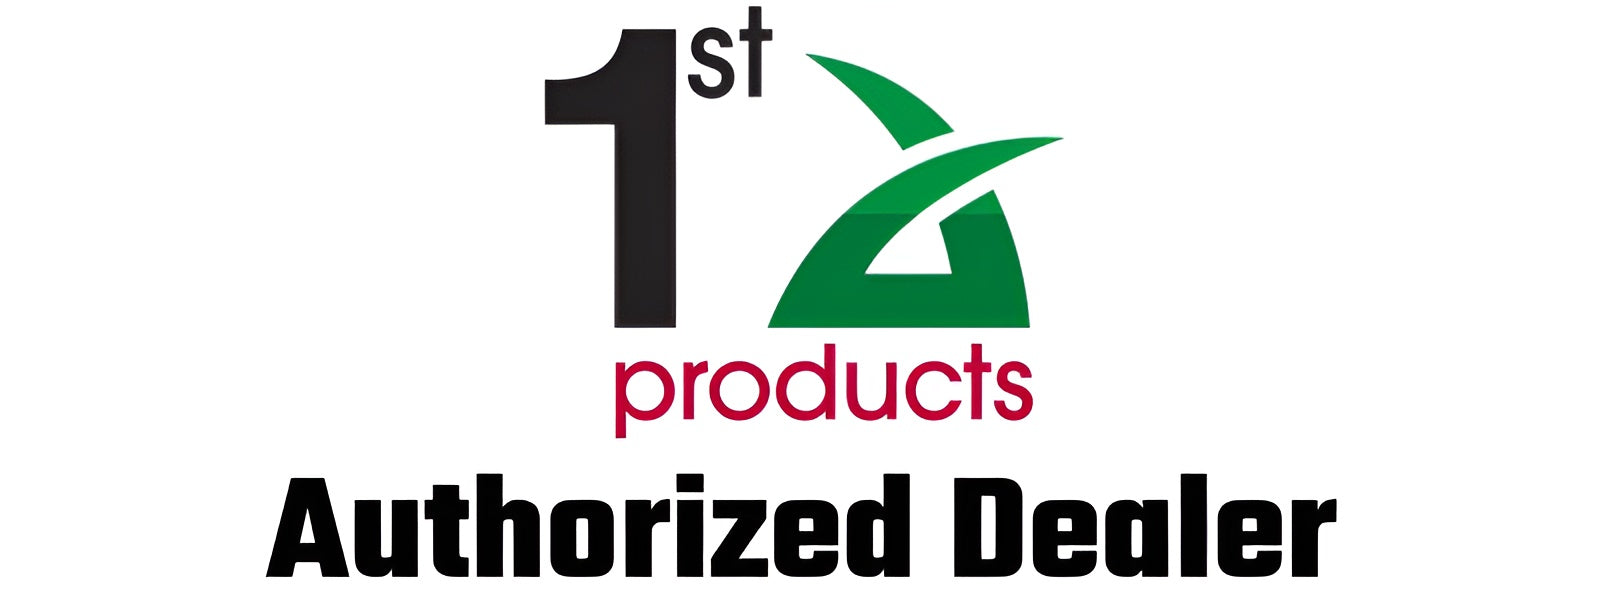 1st Products Authorized Dealer